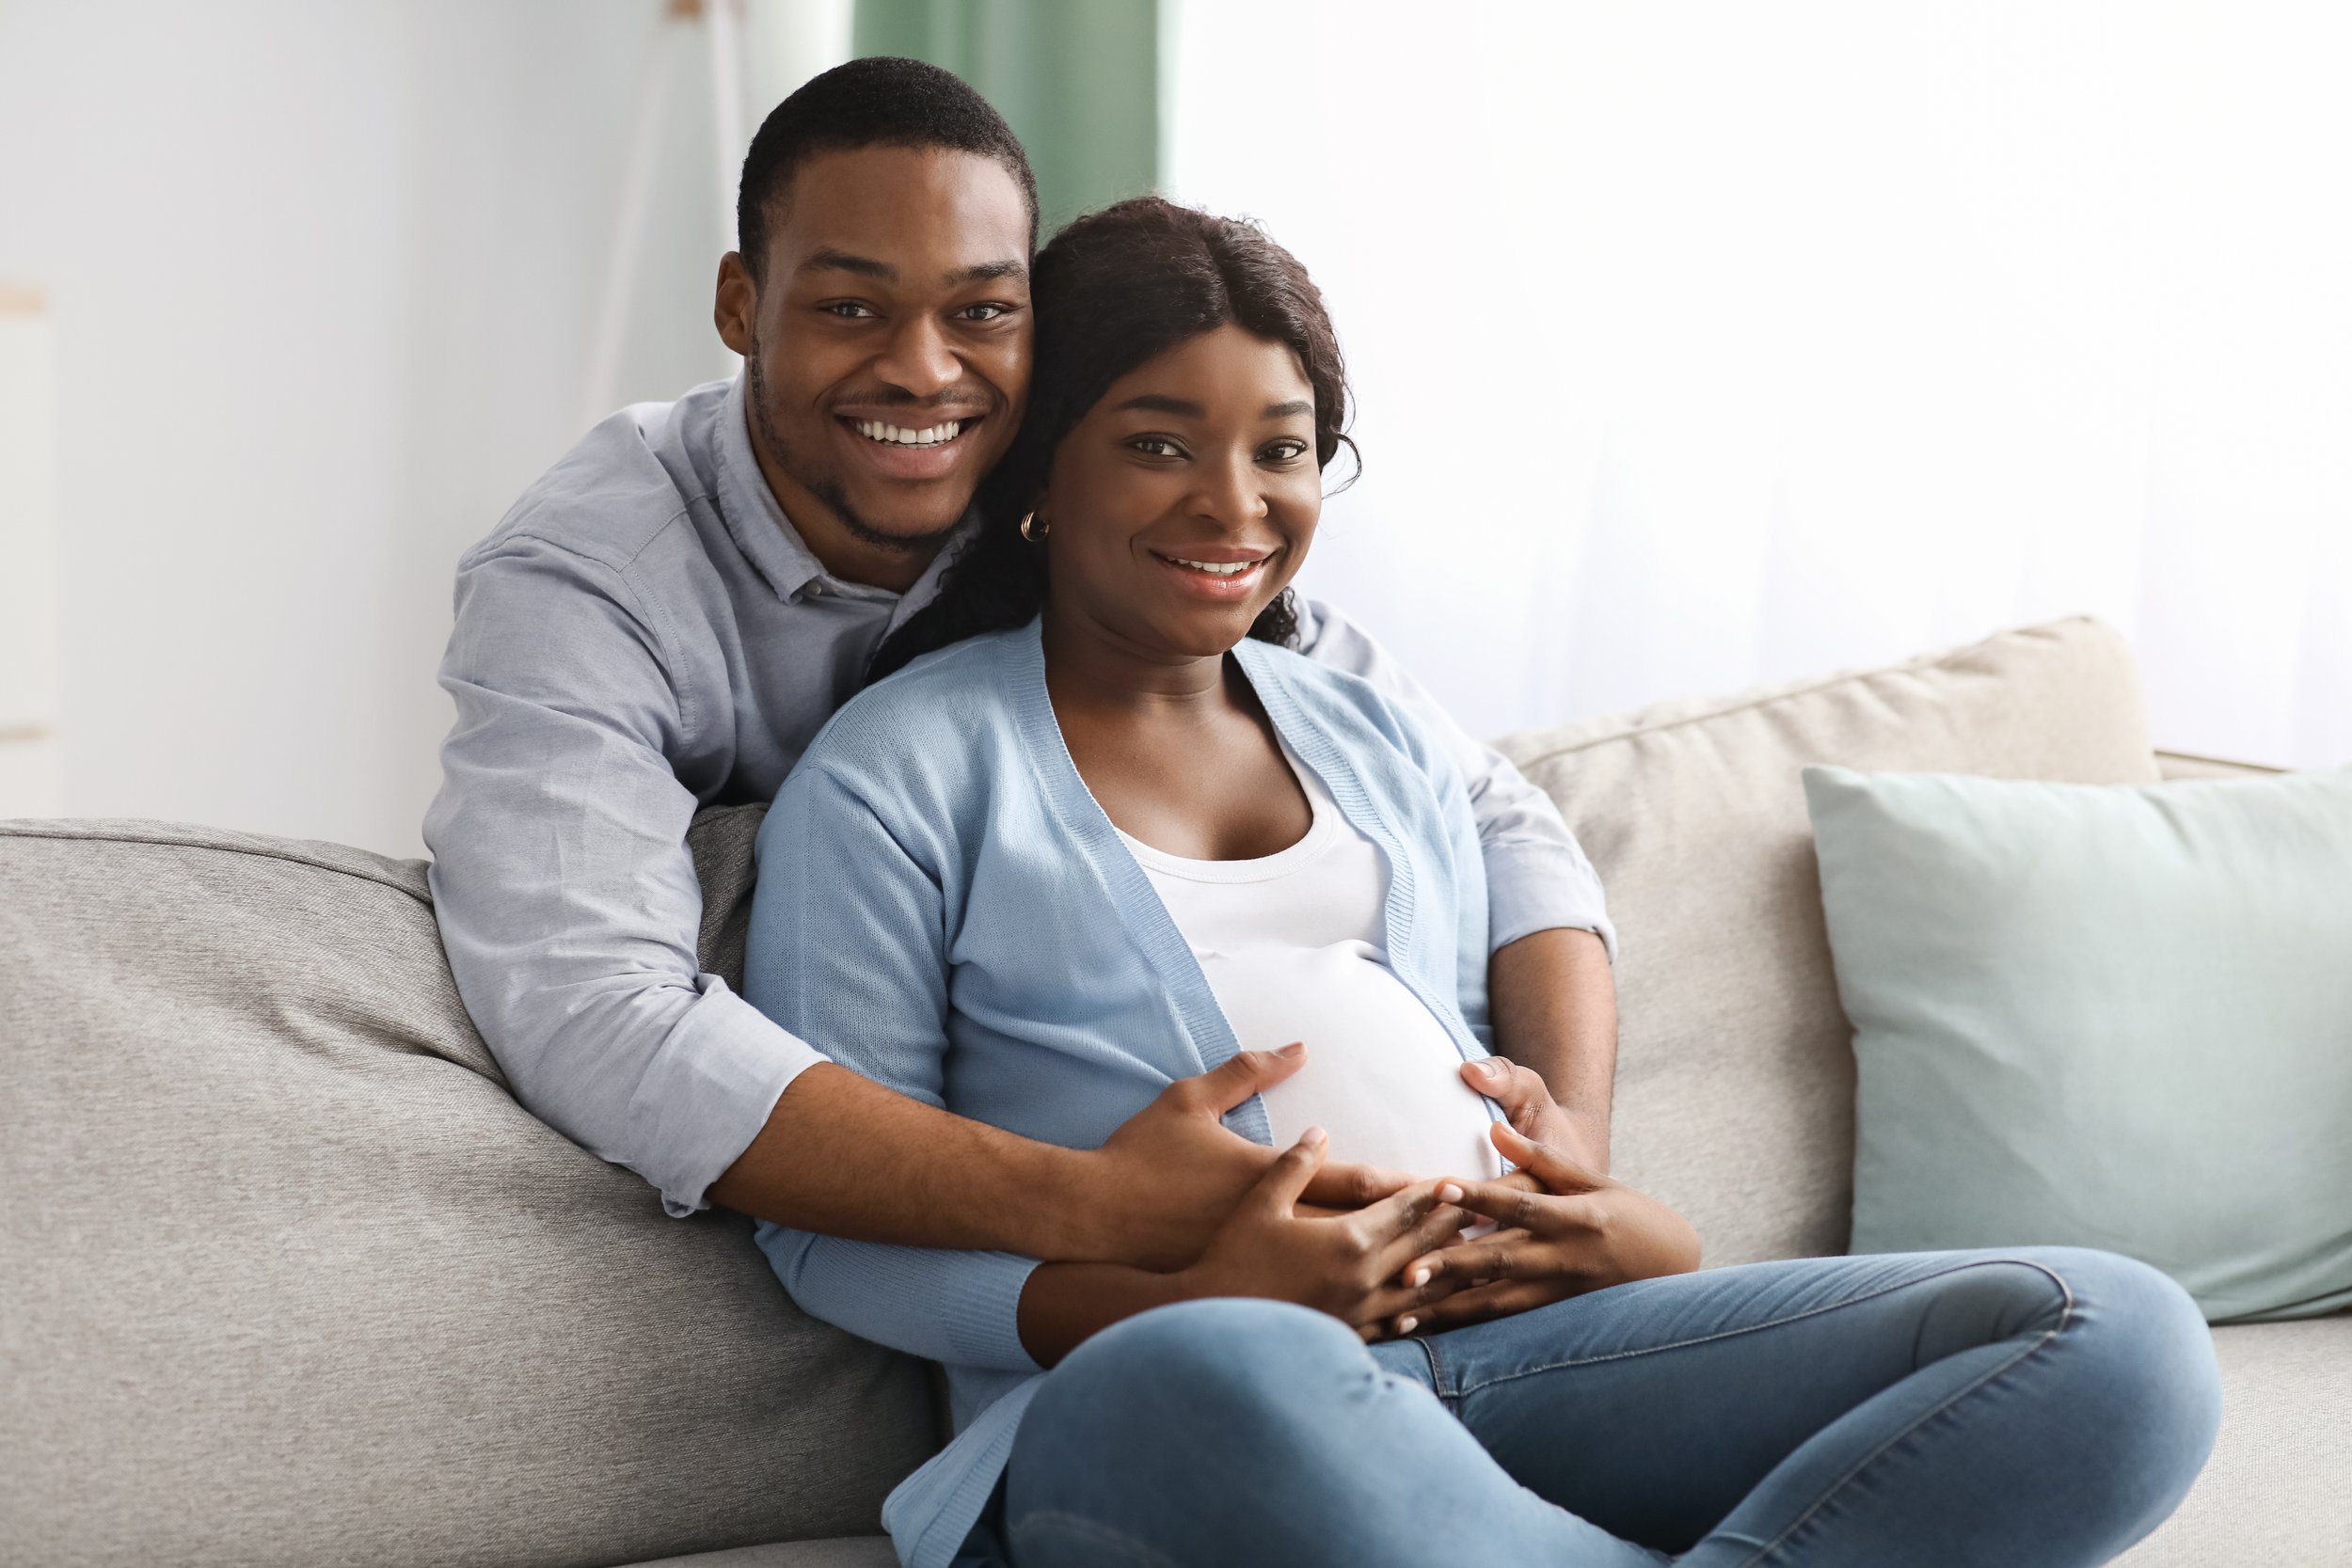 smiling-black-man-hugging-his-pregnant-woman-sitti-2021-09-02-05-07-43-utc.jpg